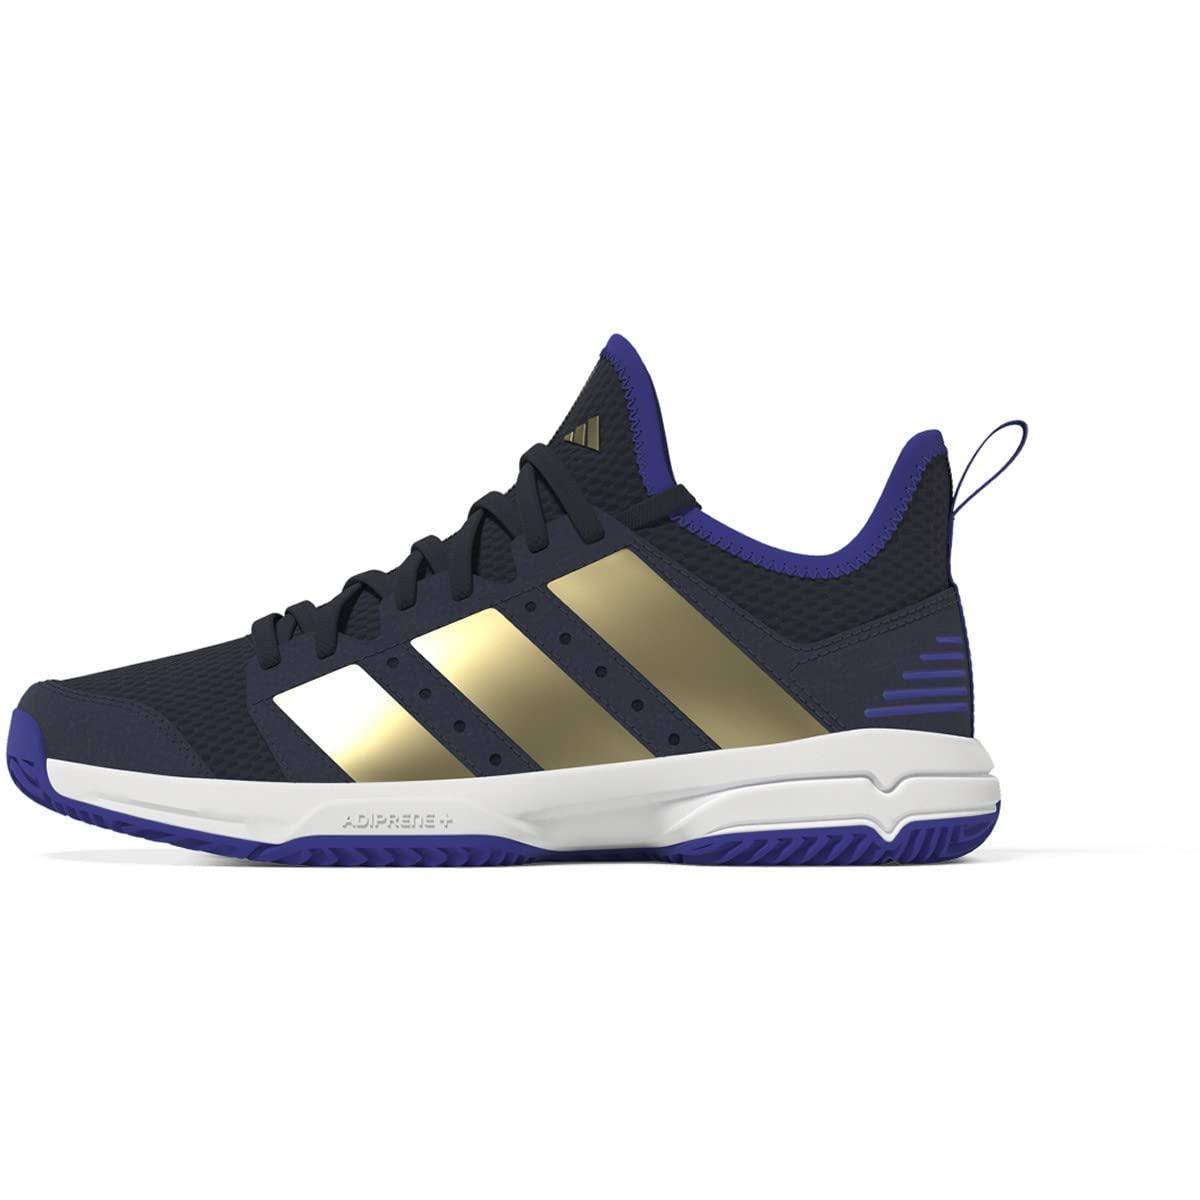 Adidas Unisex-child Stabil Indoor Running Shoe Team Navy Blue/Matte Gold/Lucid Blue